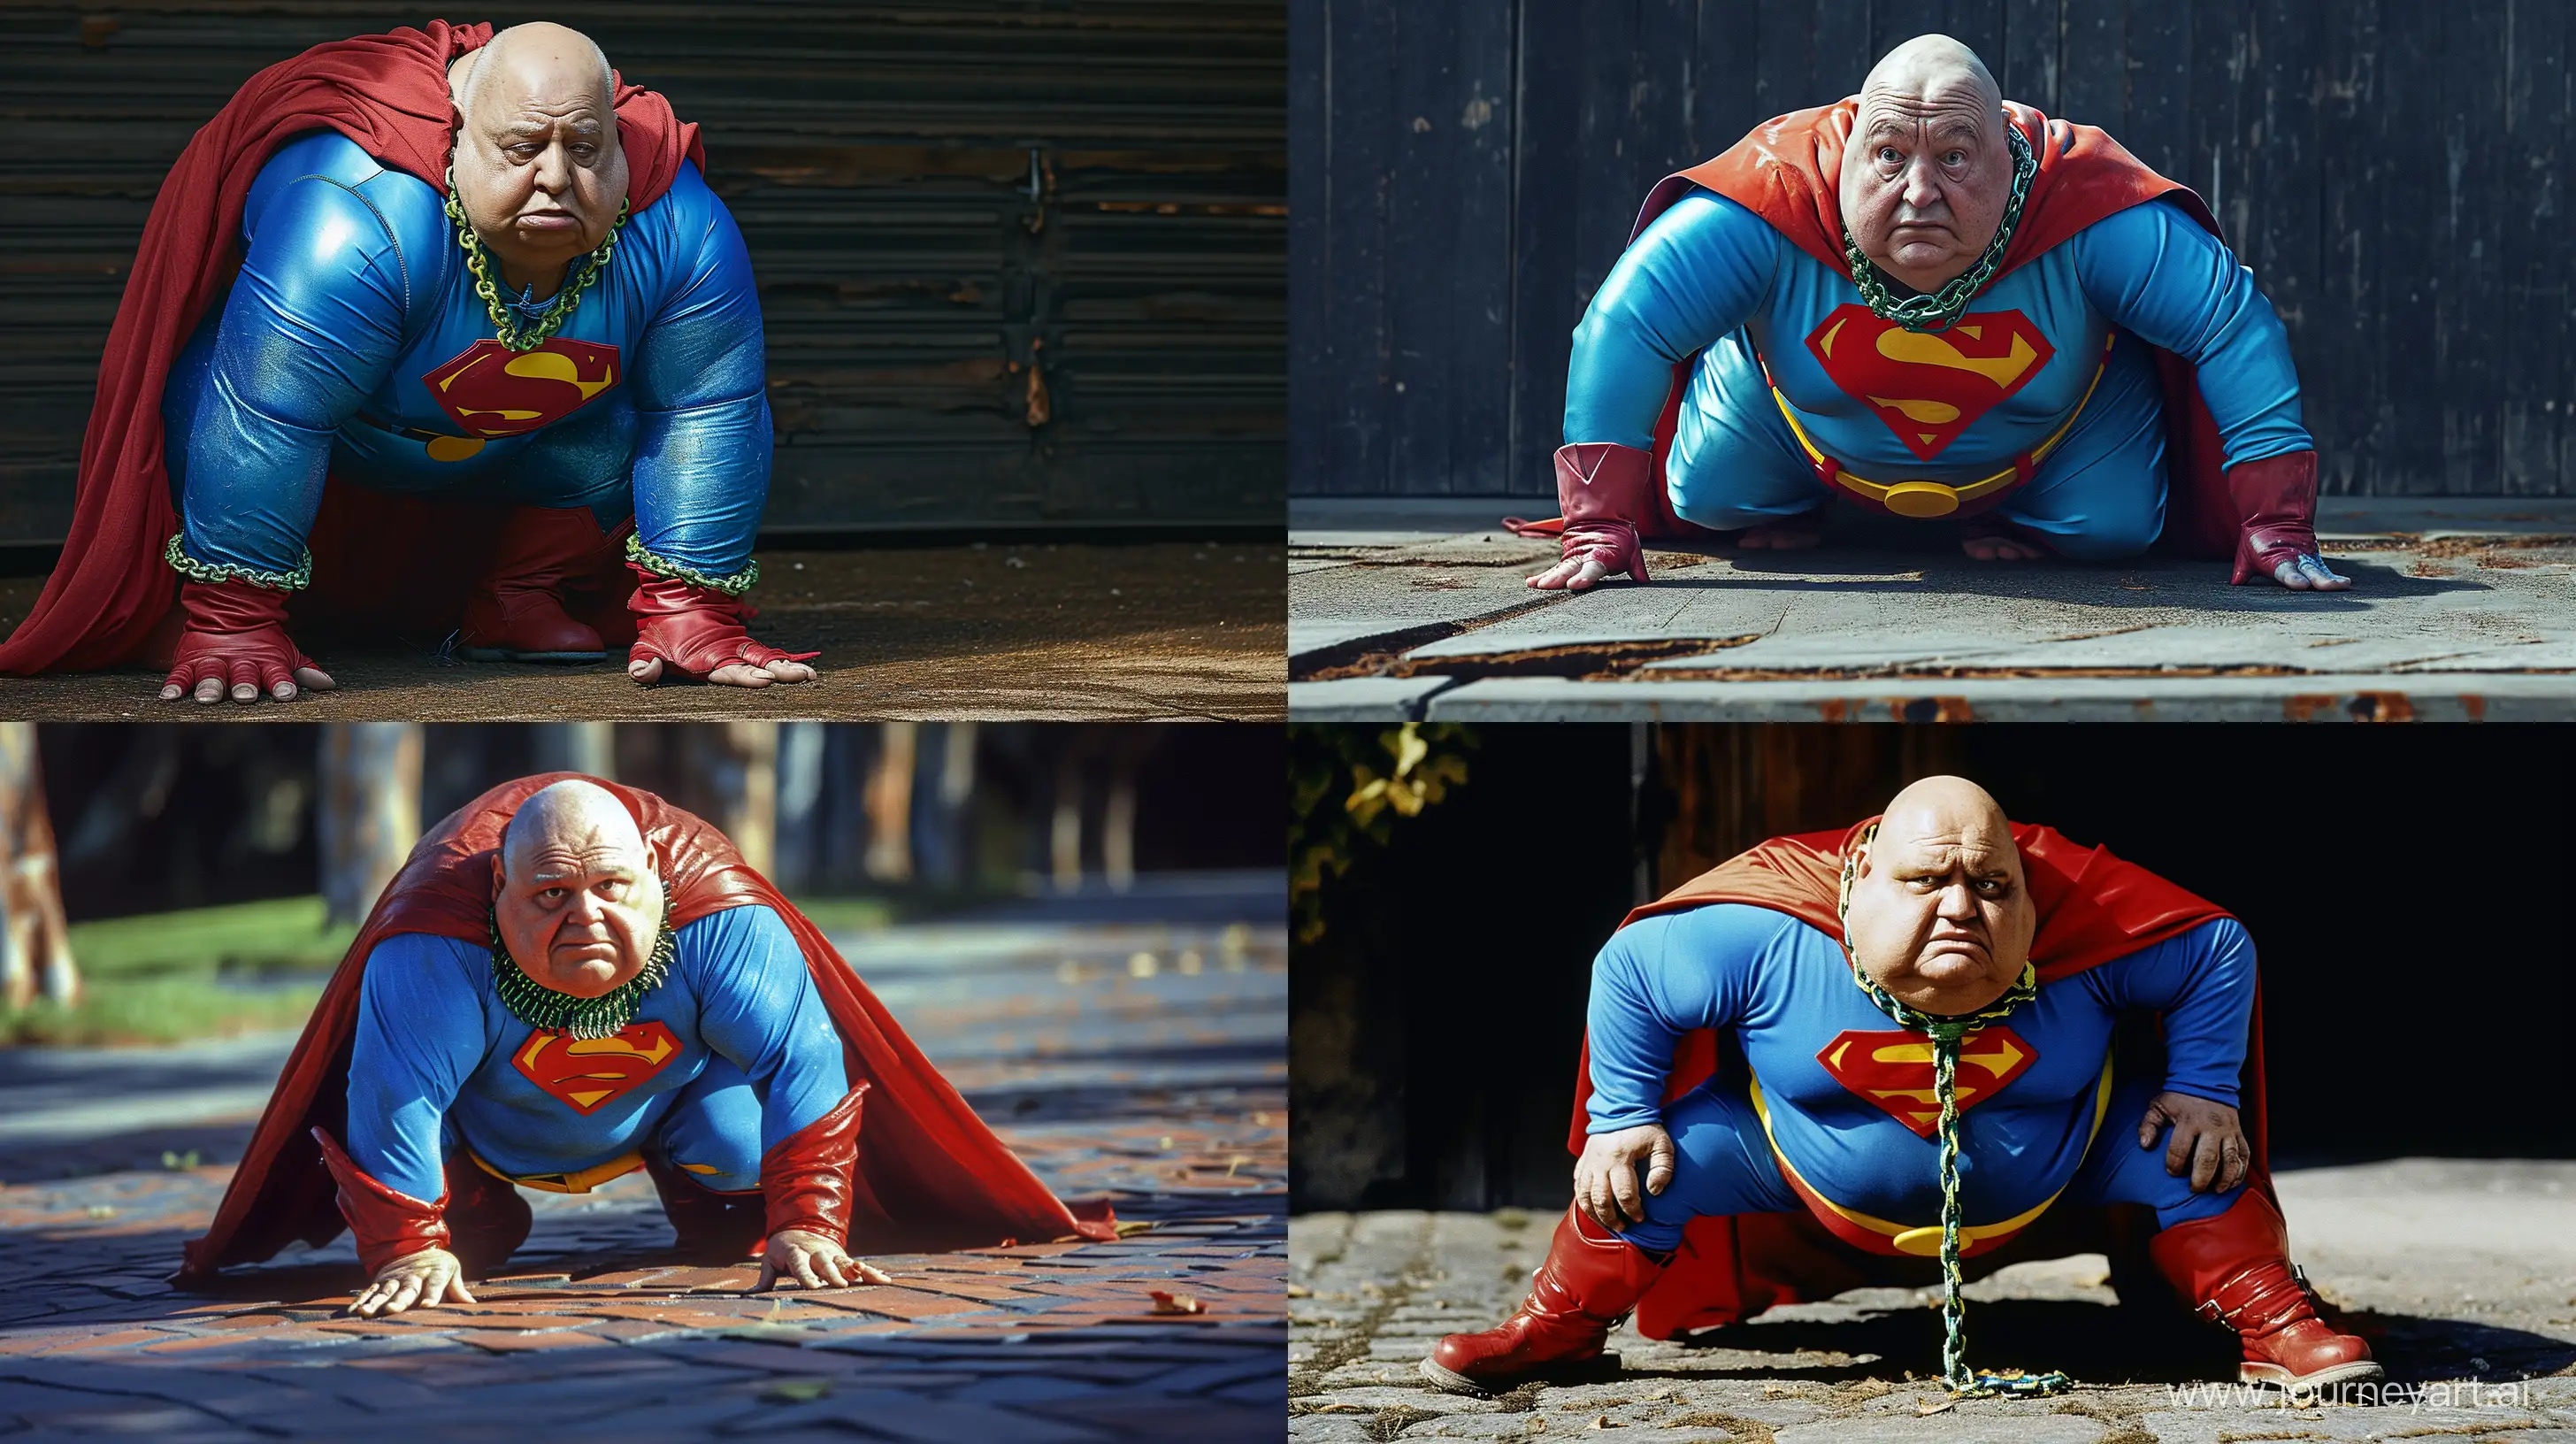 Elderly-Superman-Enjoys-Playful-Outdoor-Adventure